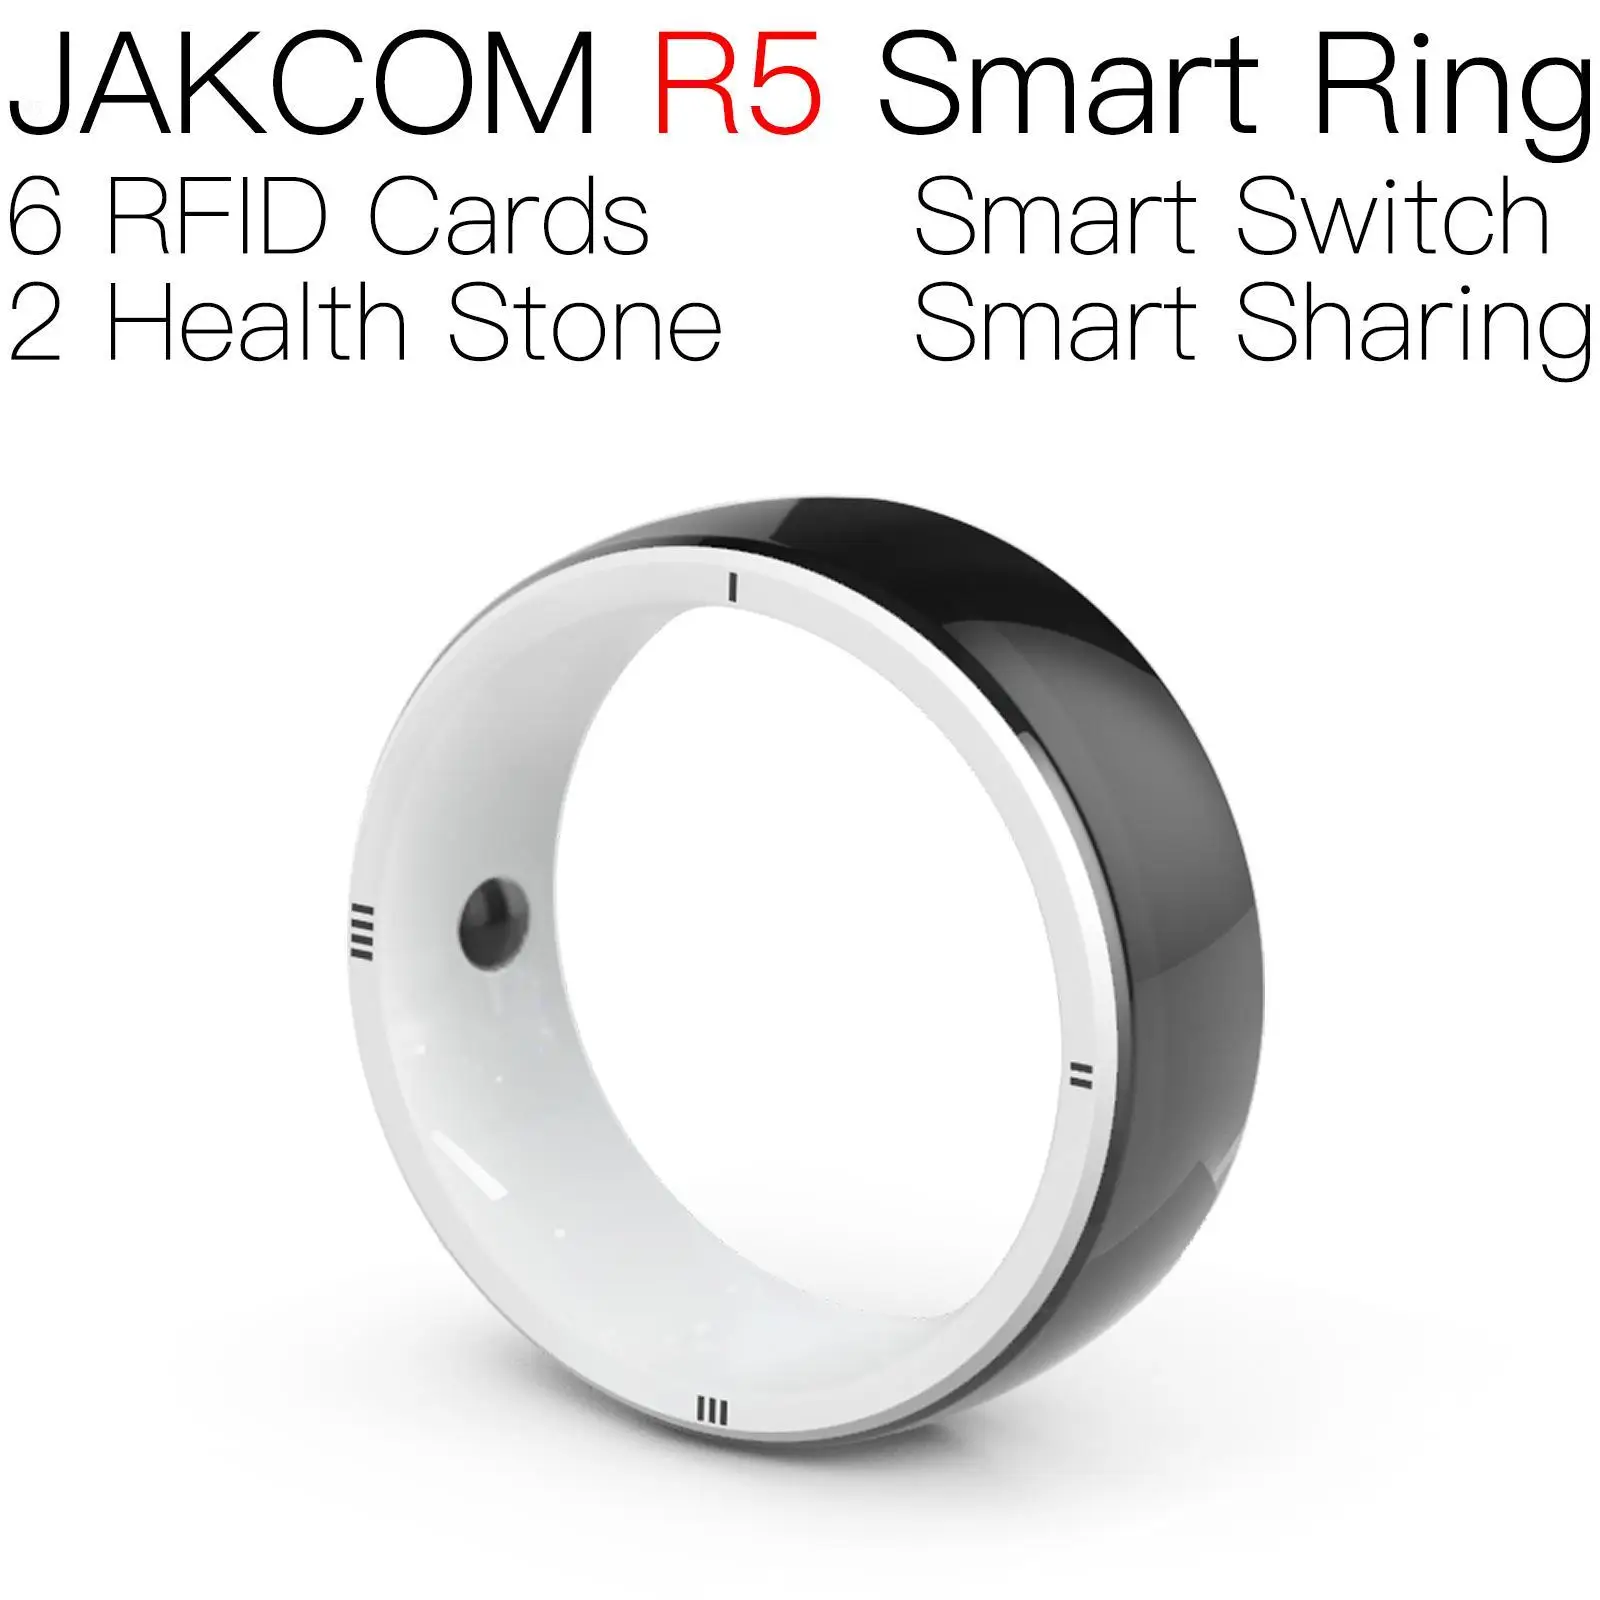 

JAKCOM R5 Smart Ring Super value than laundry nfc tag new horizons license id card ic duplicator rfid remote crd